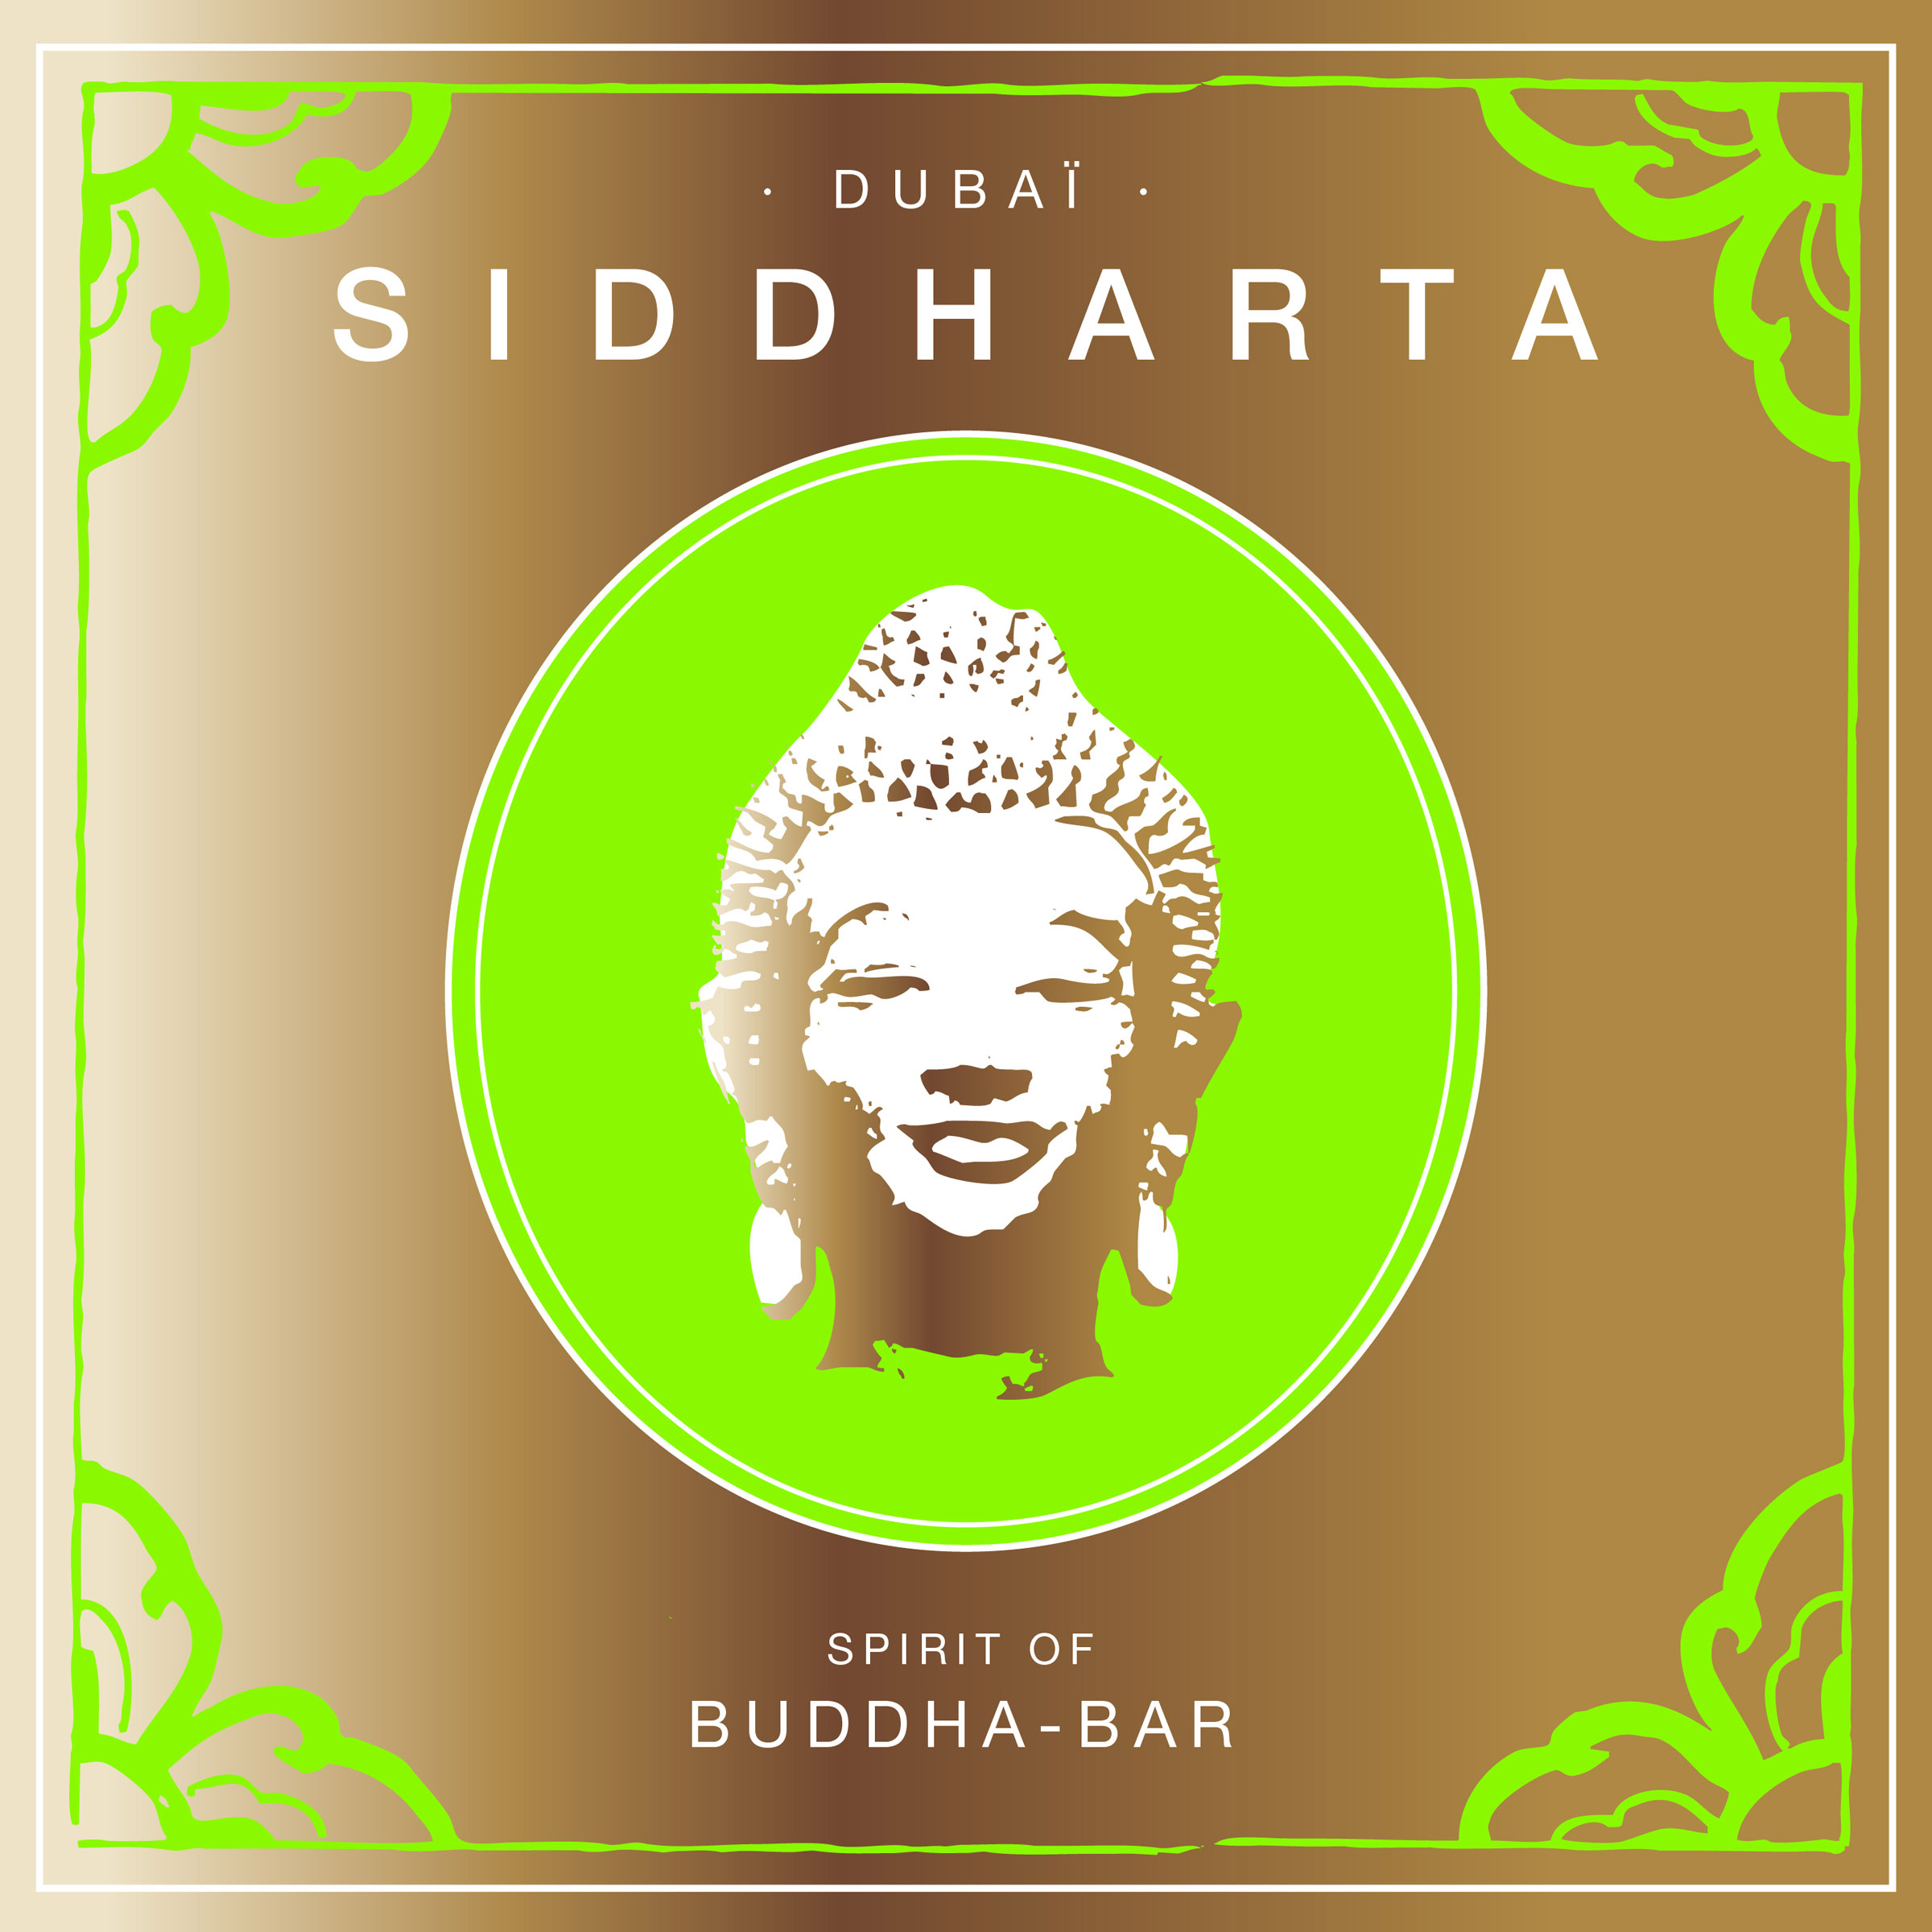 CD - Siddharta VI, Dubaï - Buddha-Bar